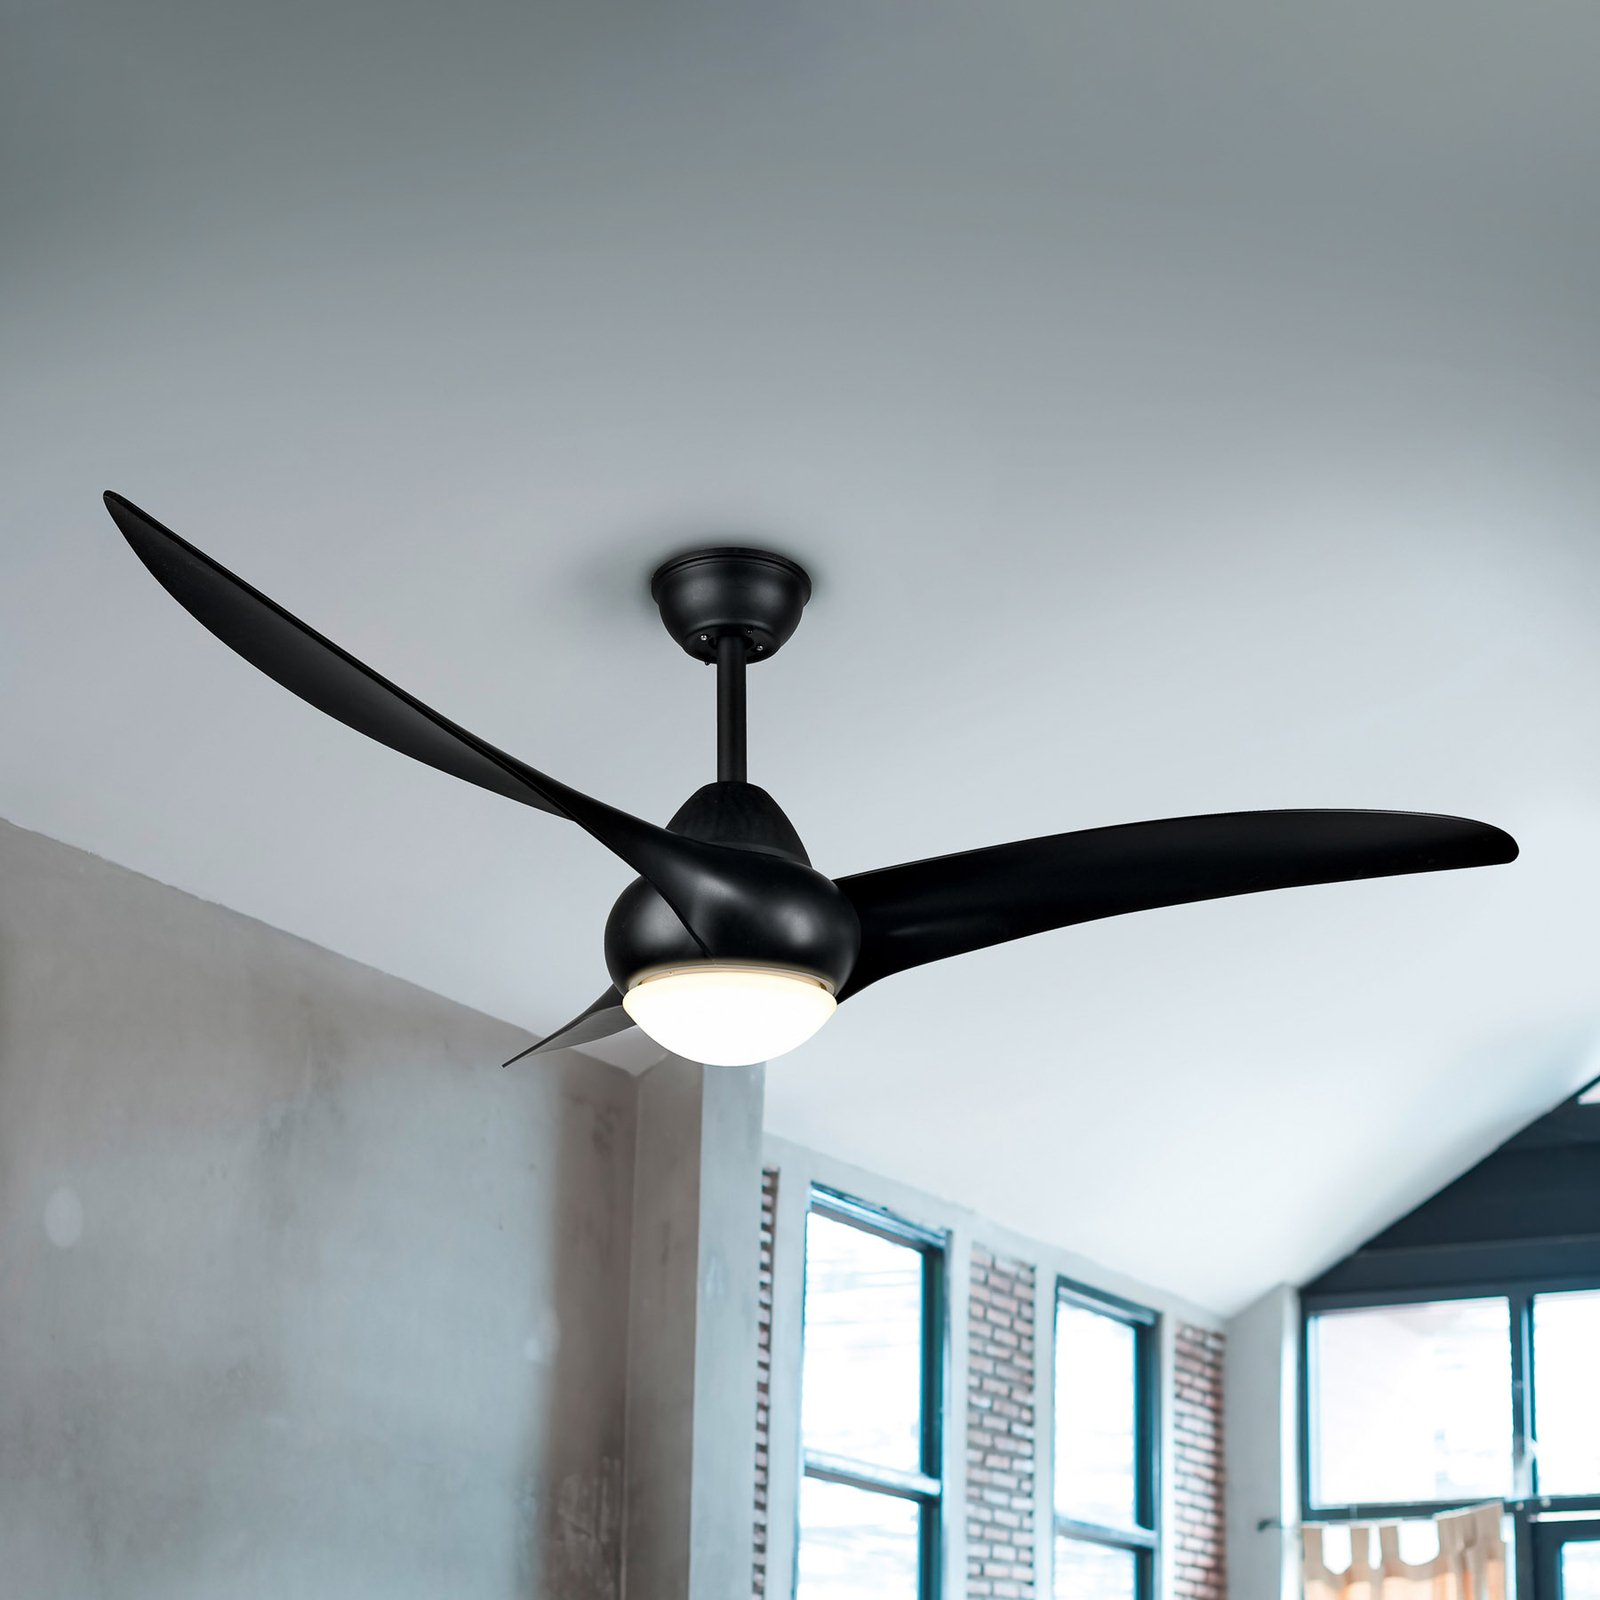 Alesund LED fan with a remote control, black